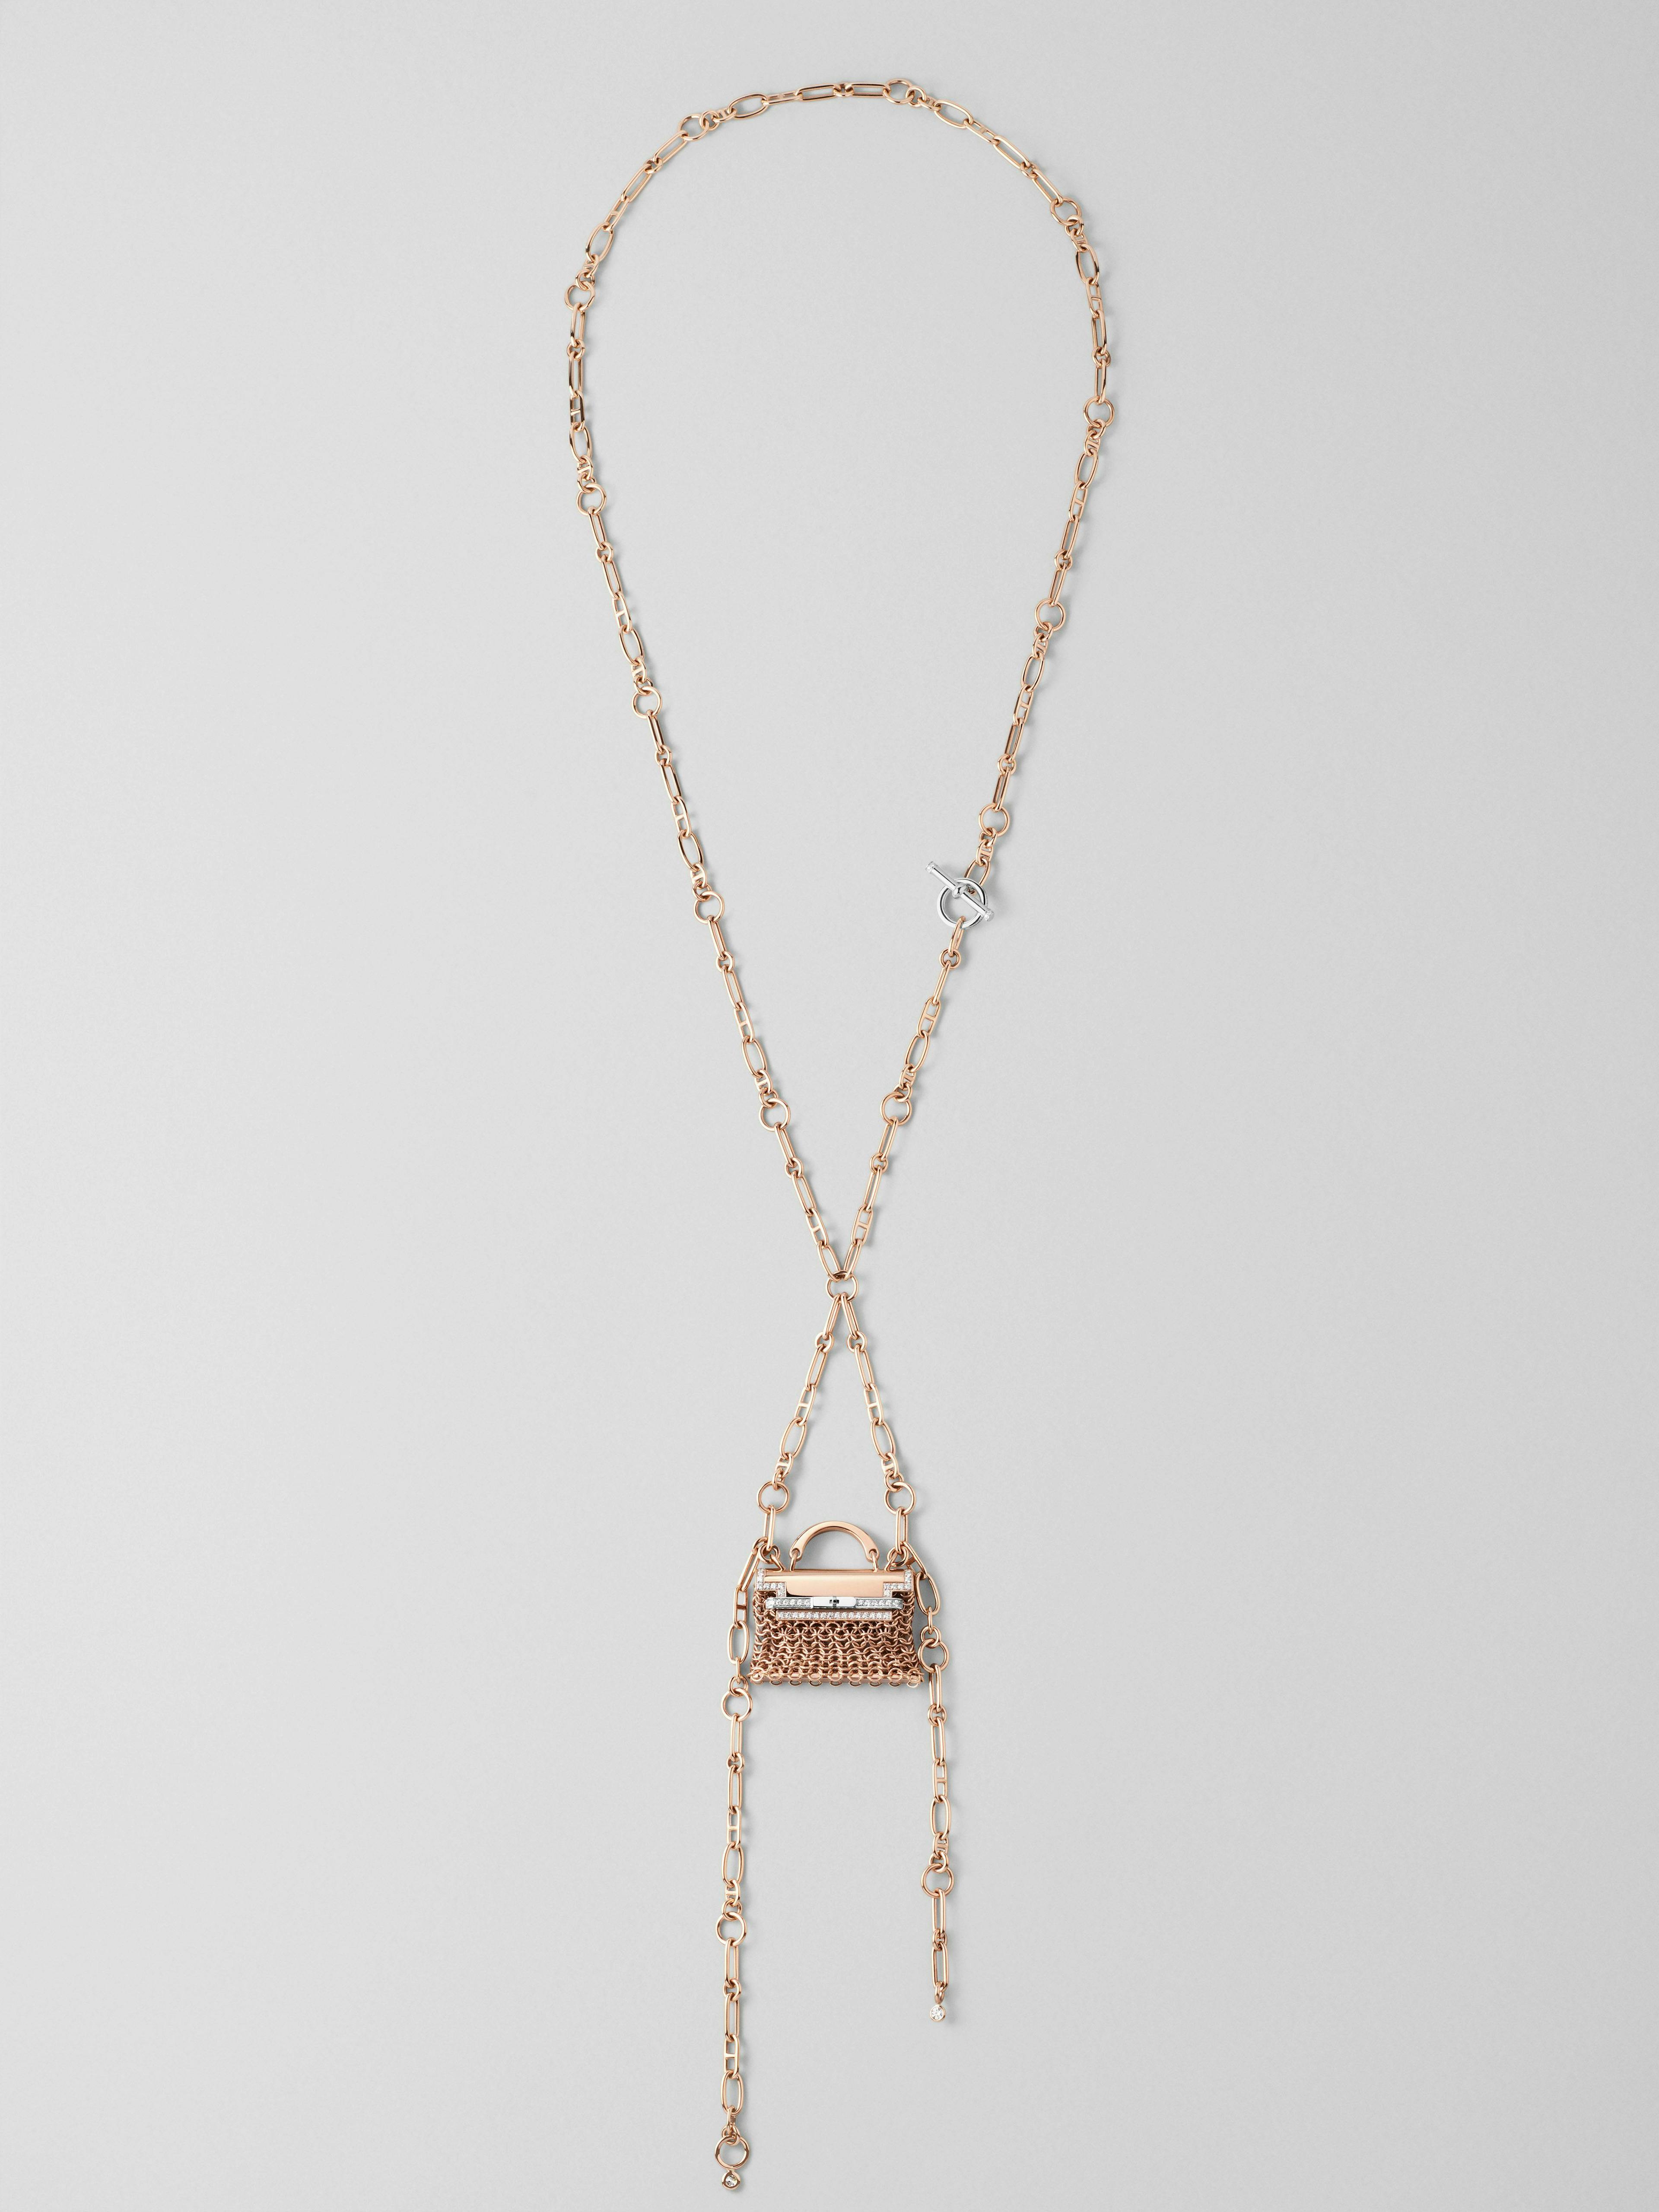 accessories jewelry necklace pendant diamond gemstone